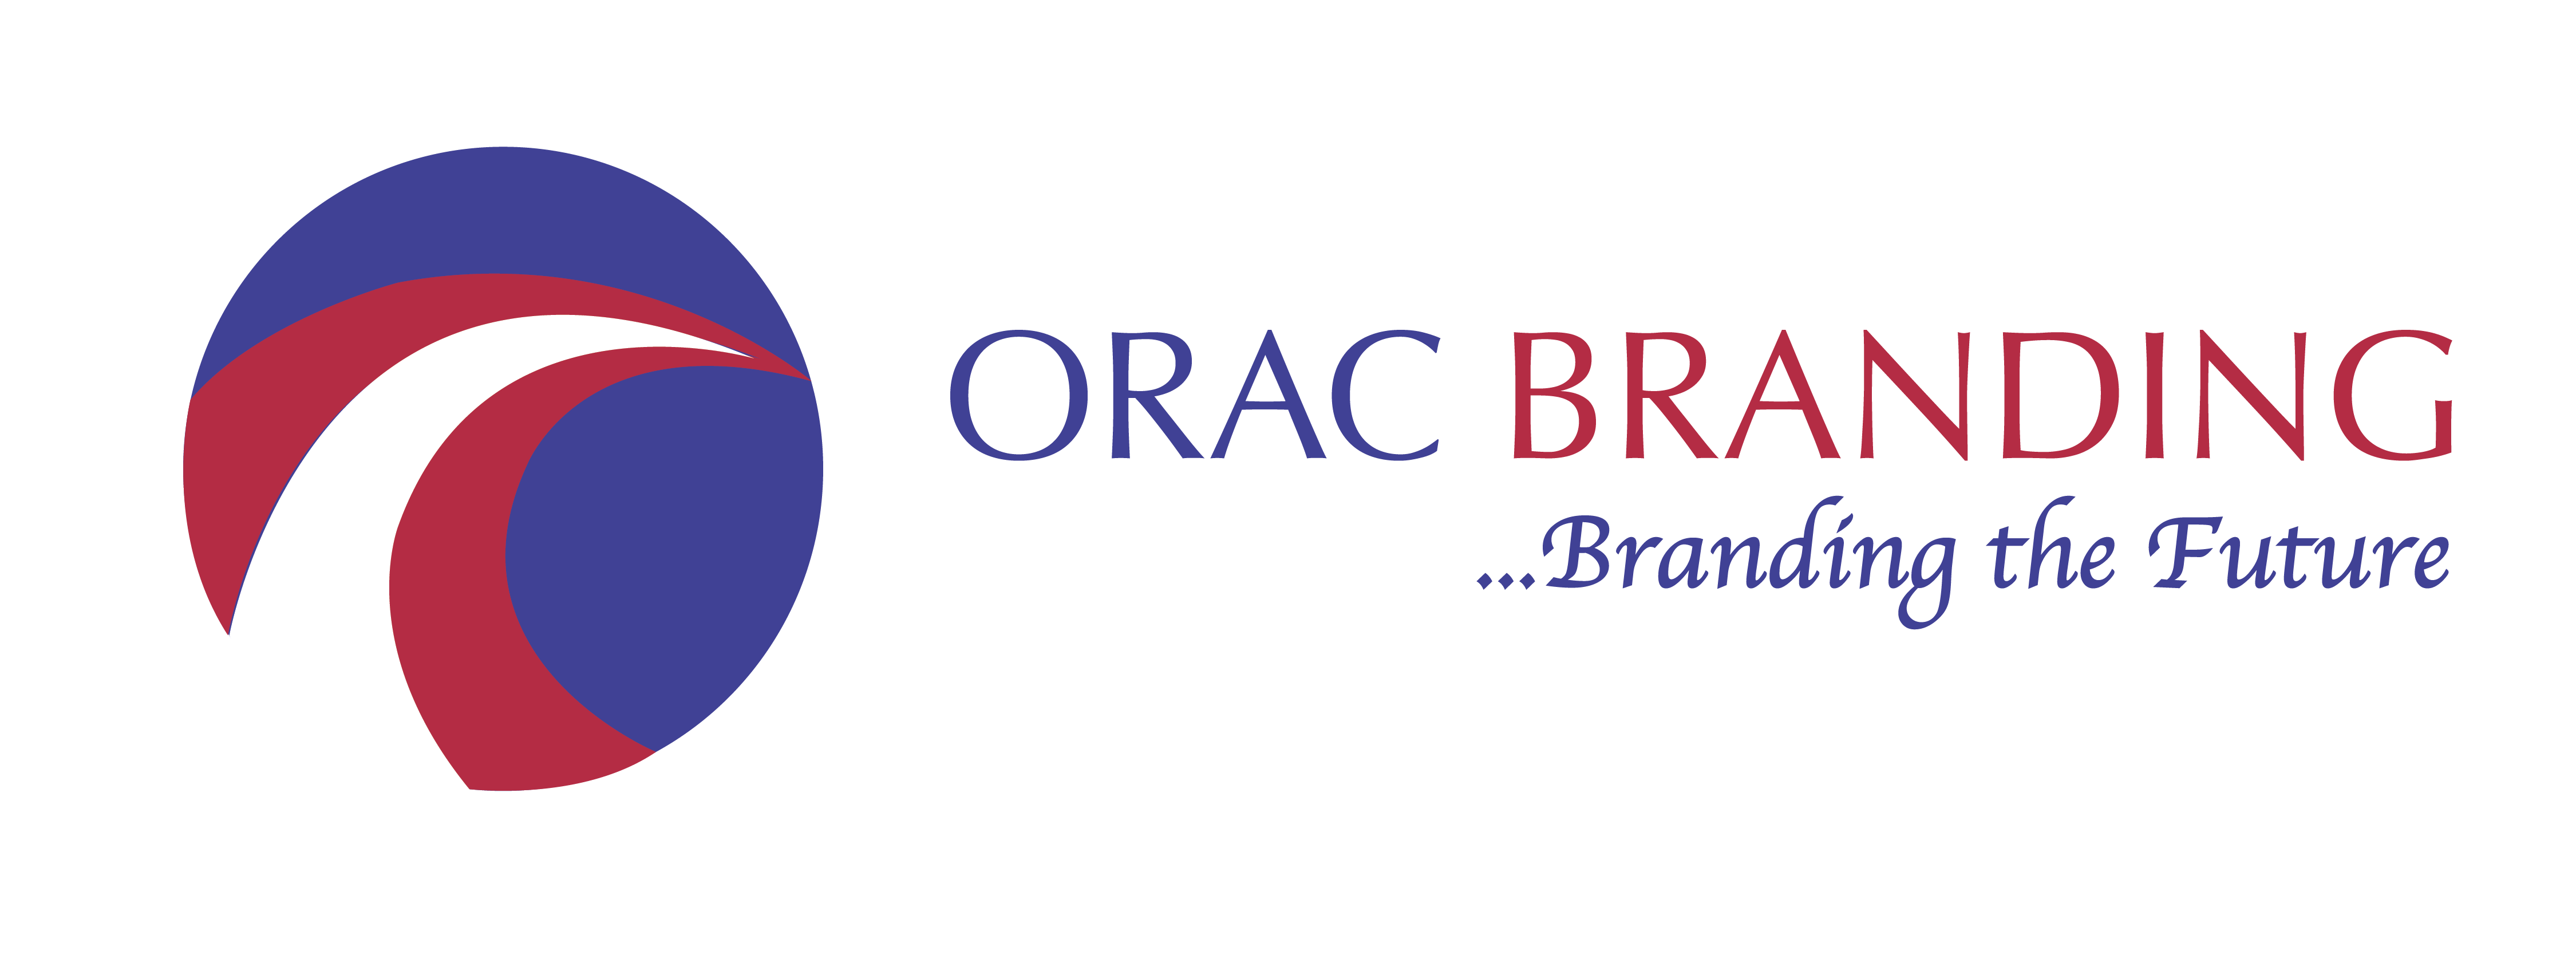 ORAC BRANDING